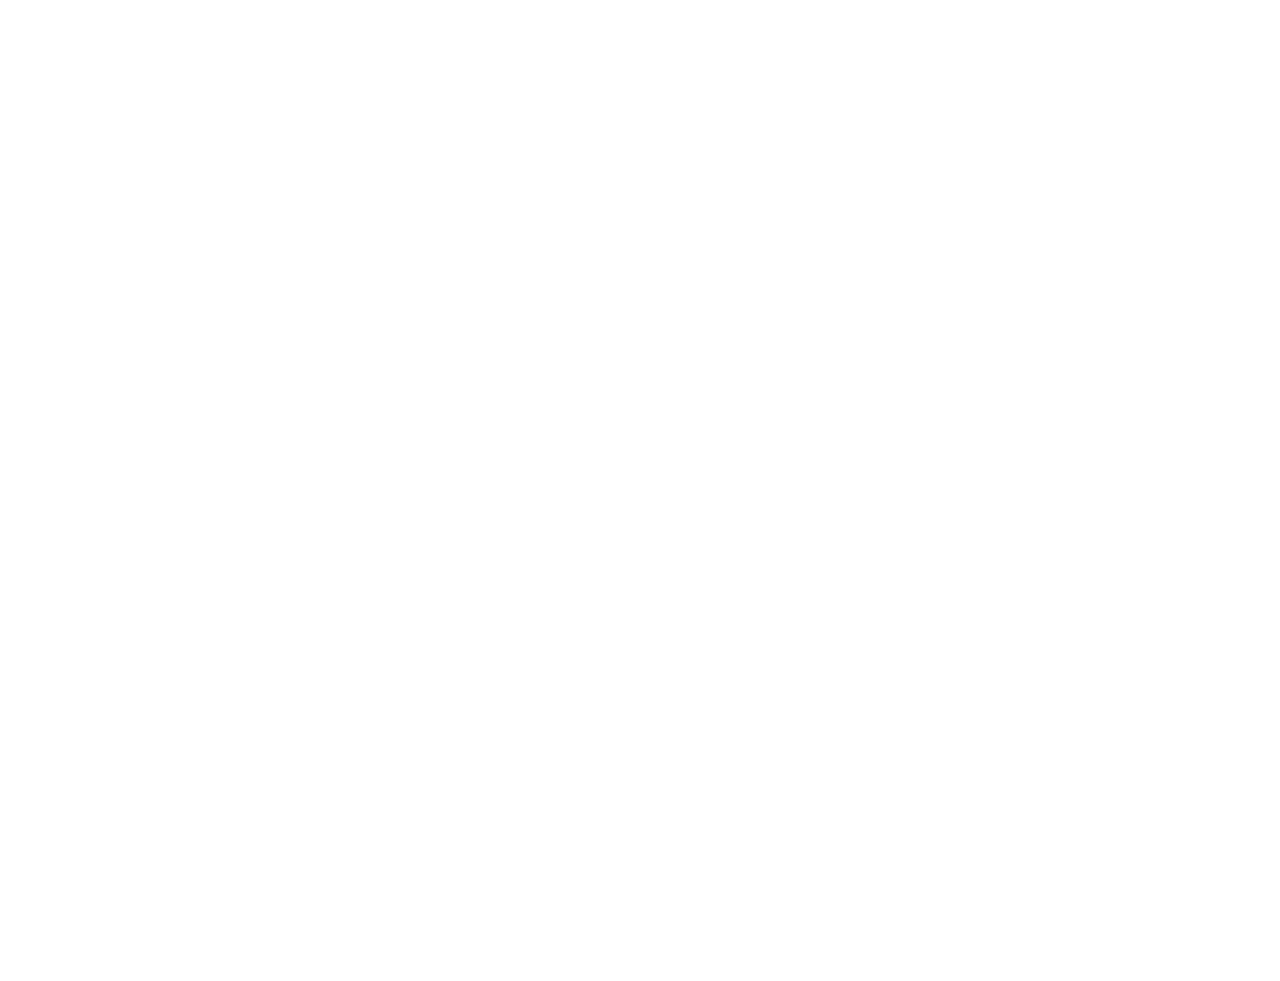 Bighorn Fire Company 's logo